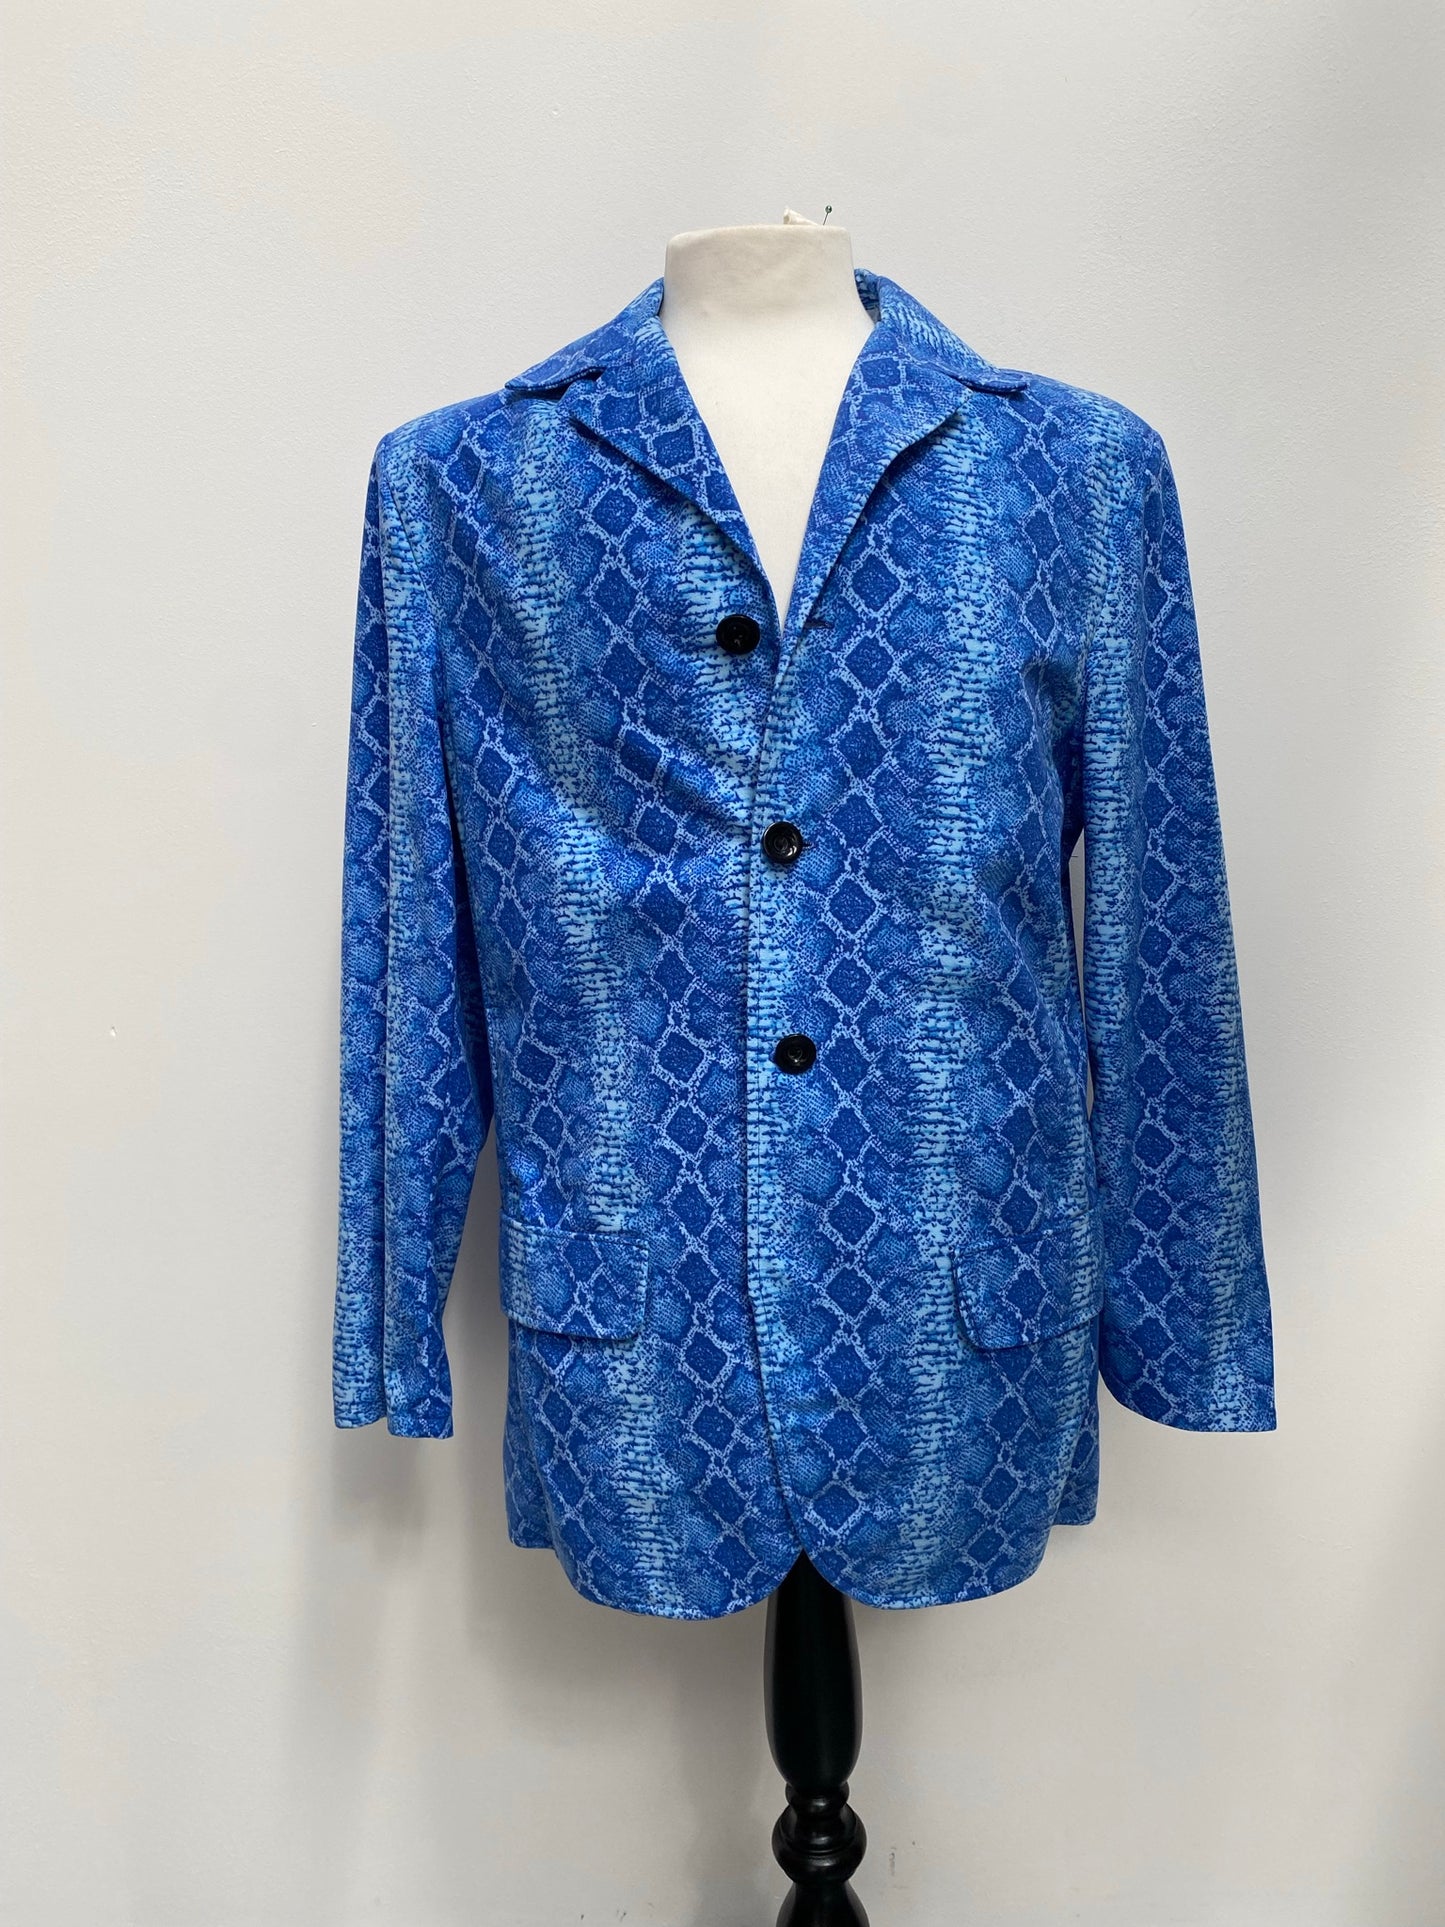 1970s/1980s Style Blue Snakeskin Print Suit Size Large - Ex Hire Fancy Dress Costumes